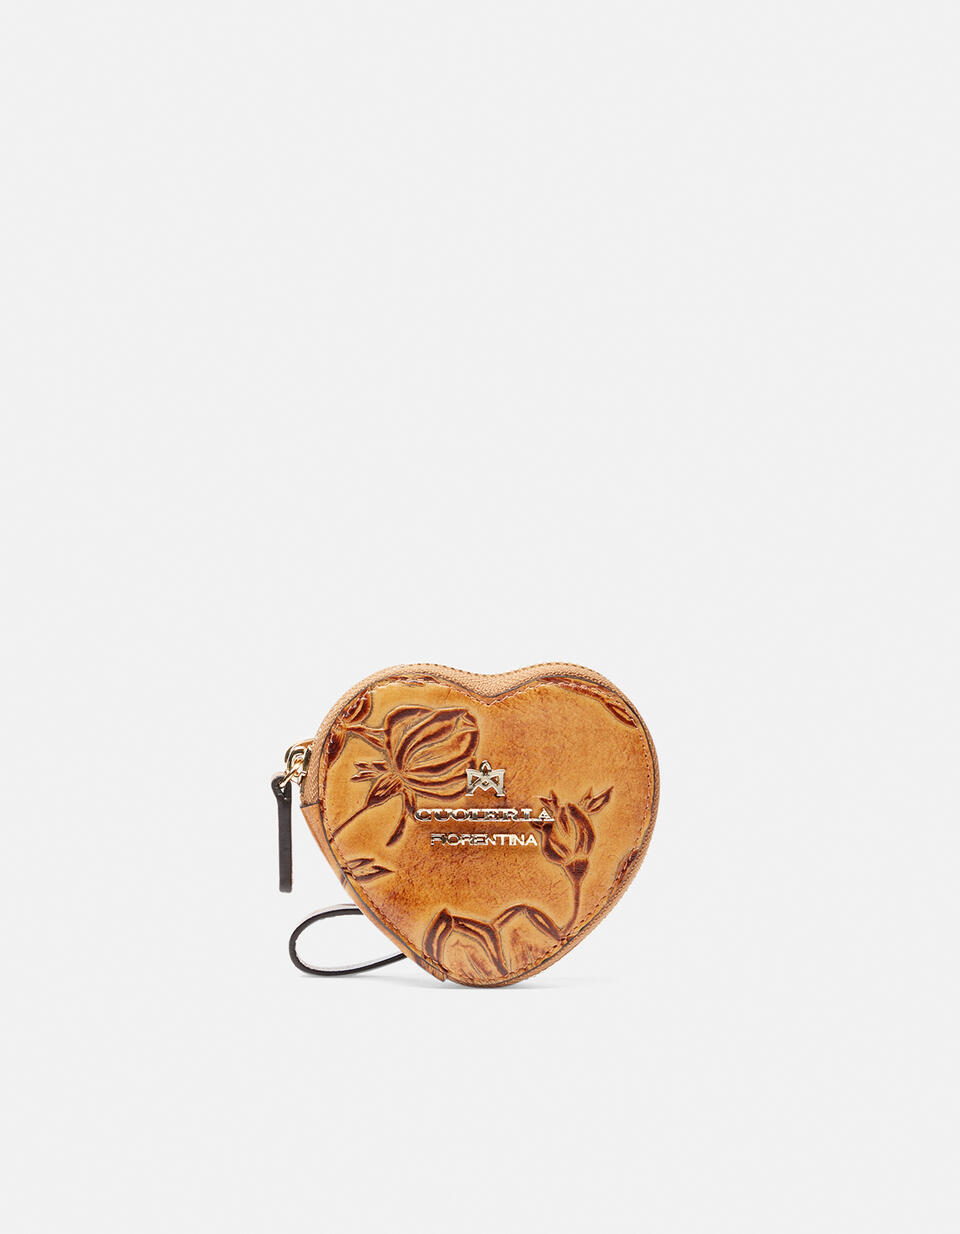 Heart purse - Women's Accessories | Accessories  - Women's Accessories | AccessoriesCuoieria Fiorentina